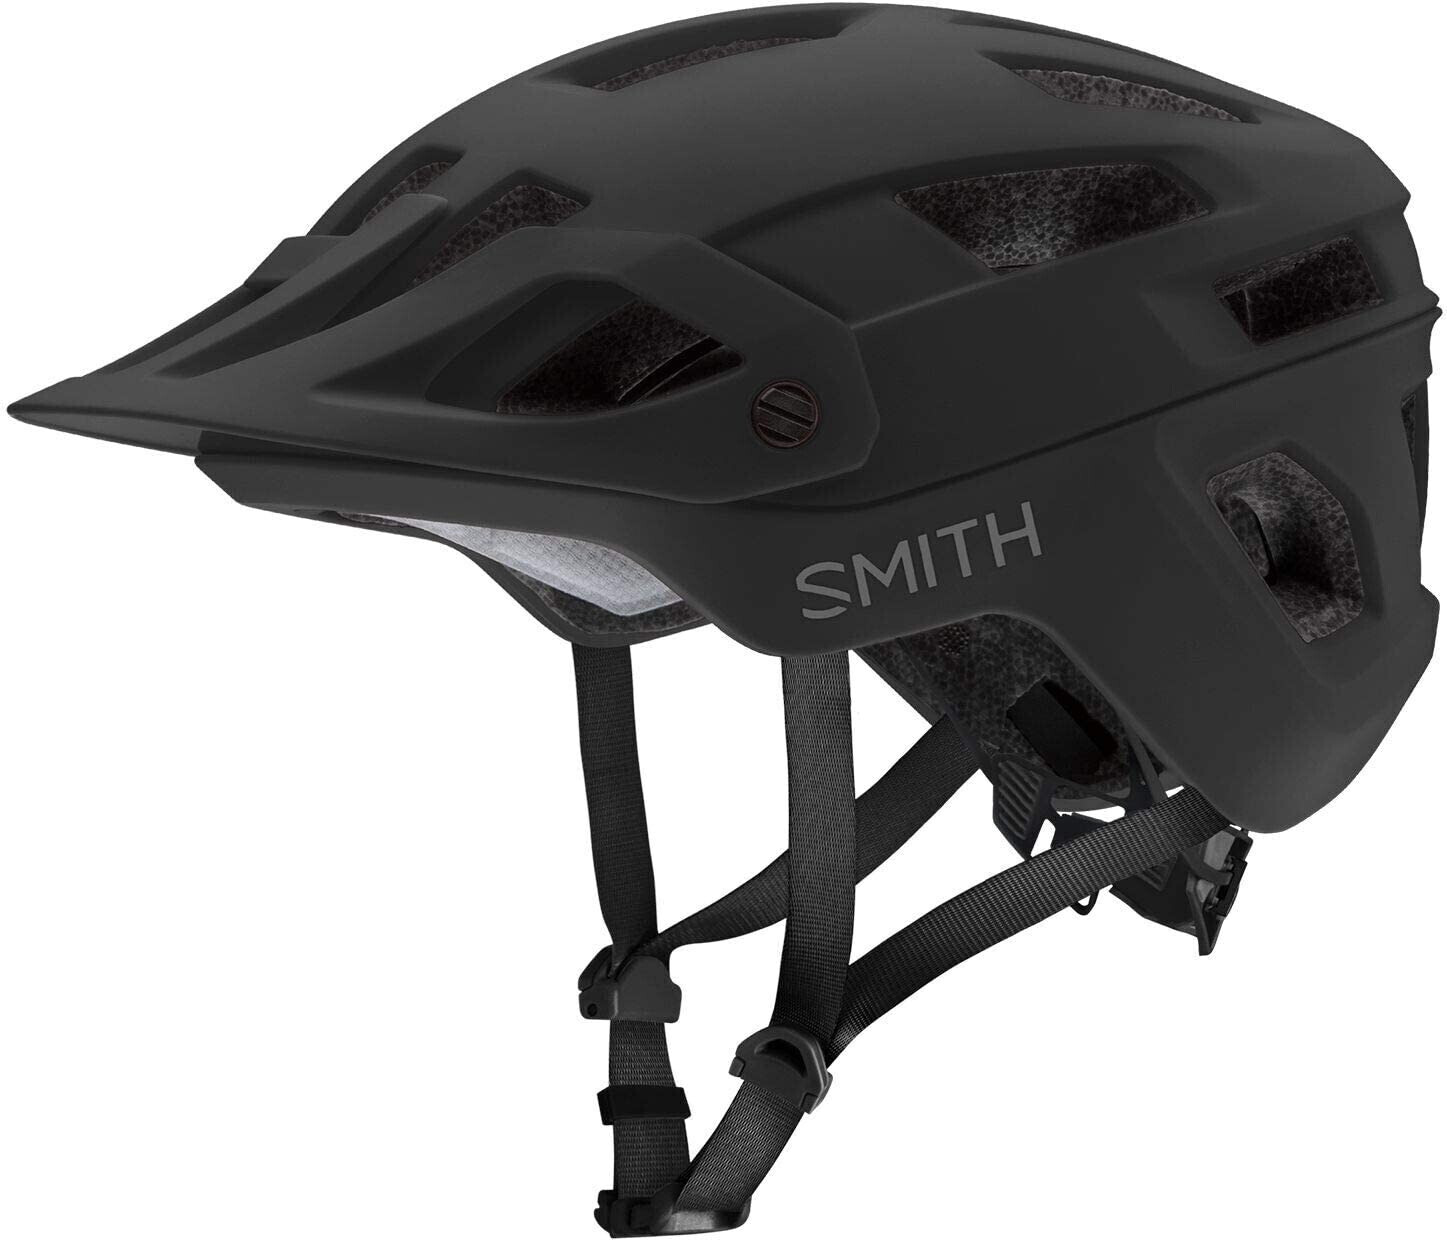 Photos - Bike Helmet Smith Optics Smith Engage Mips Cycling Helmet Matte Black 